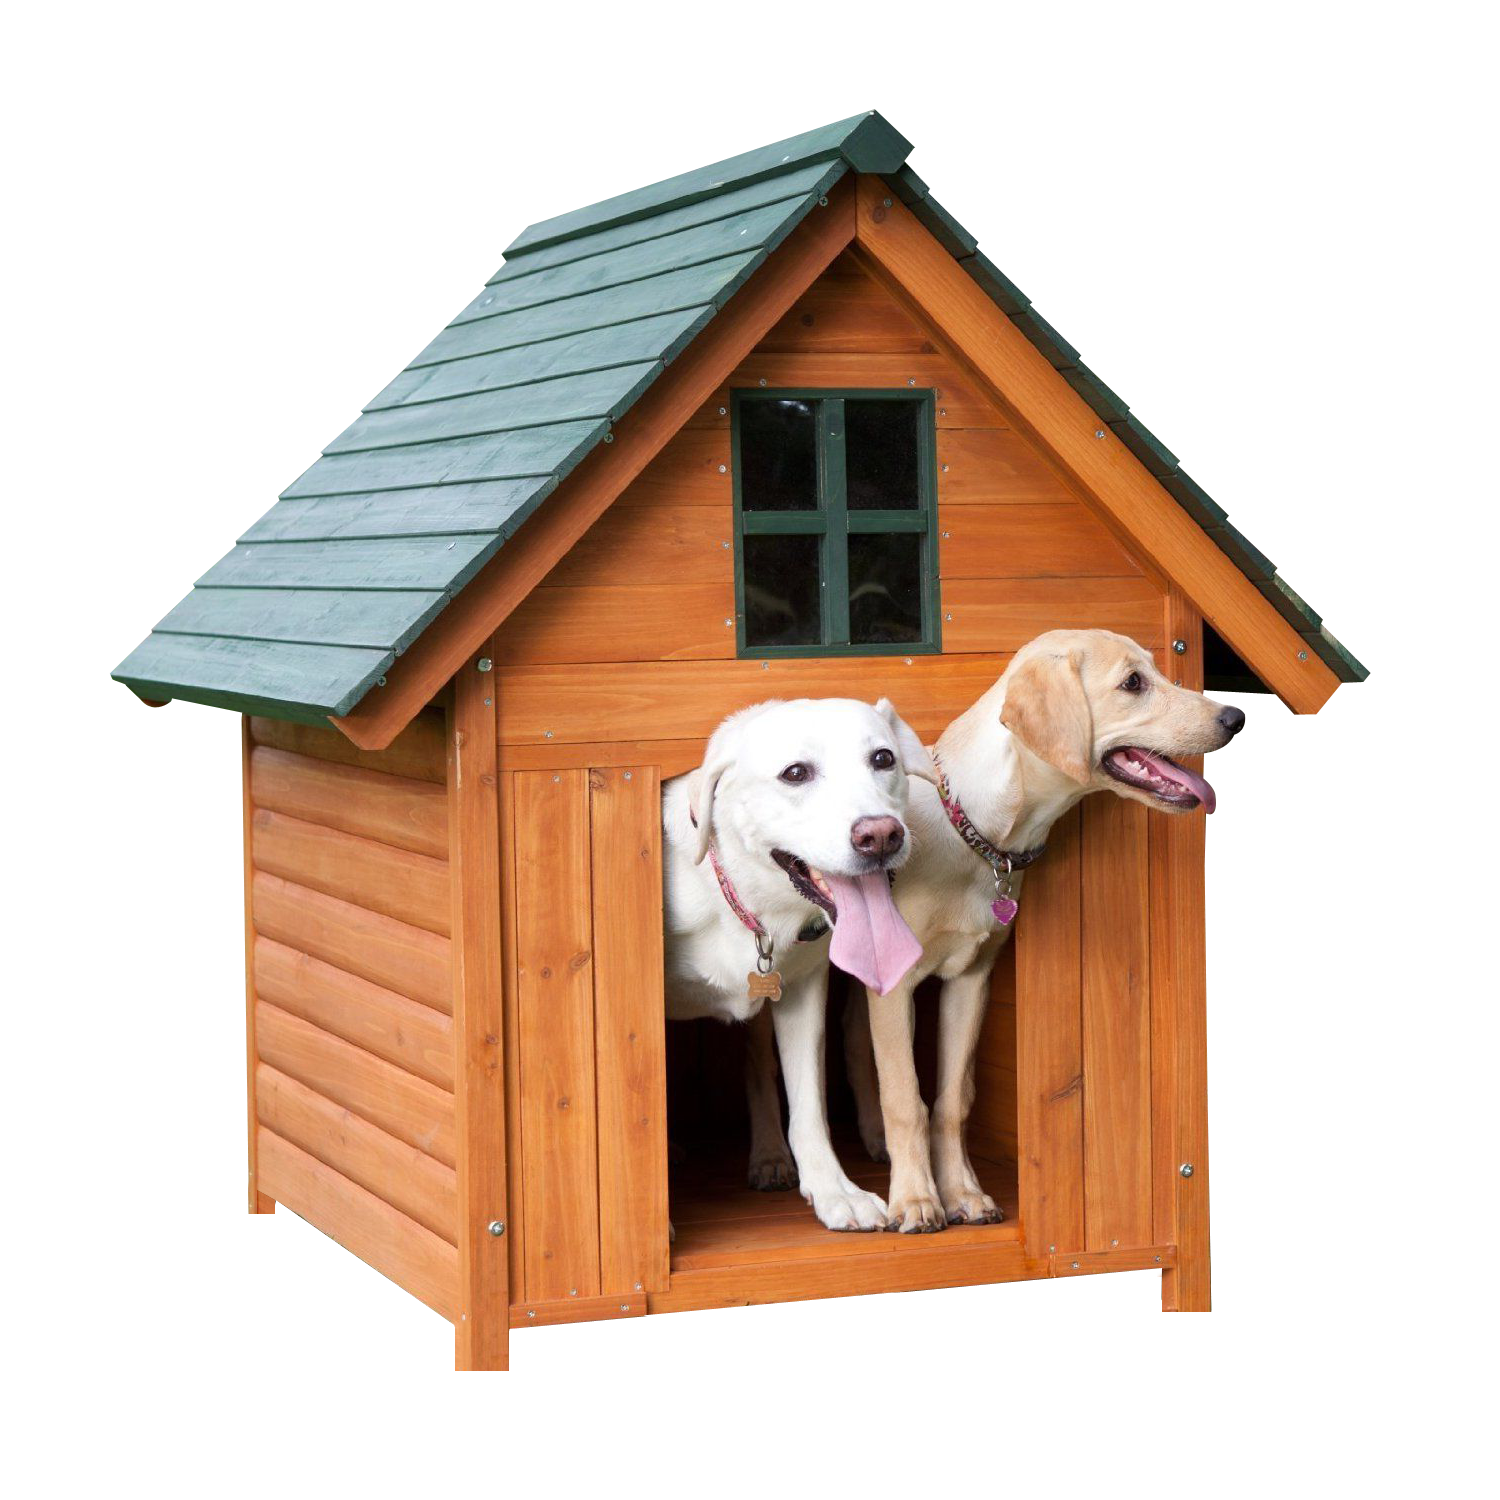 Dog House PNG Image